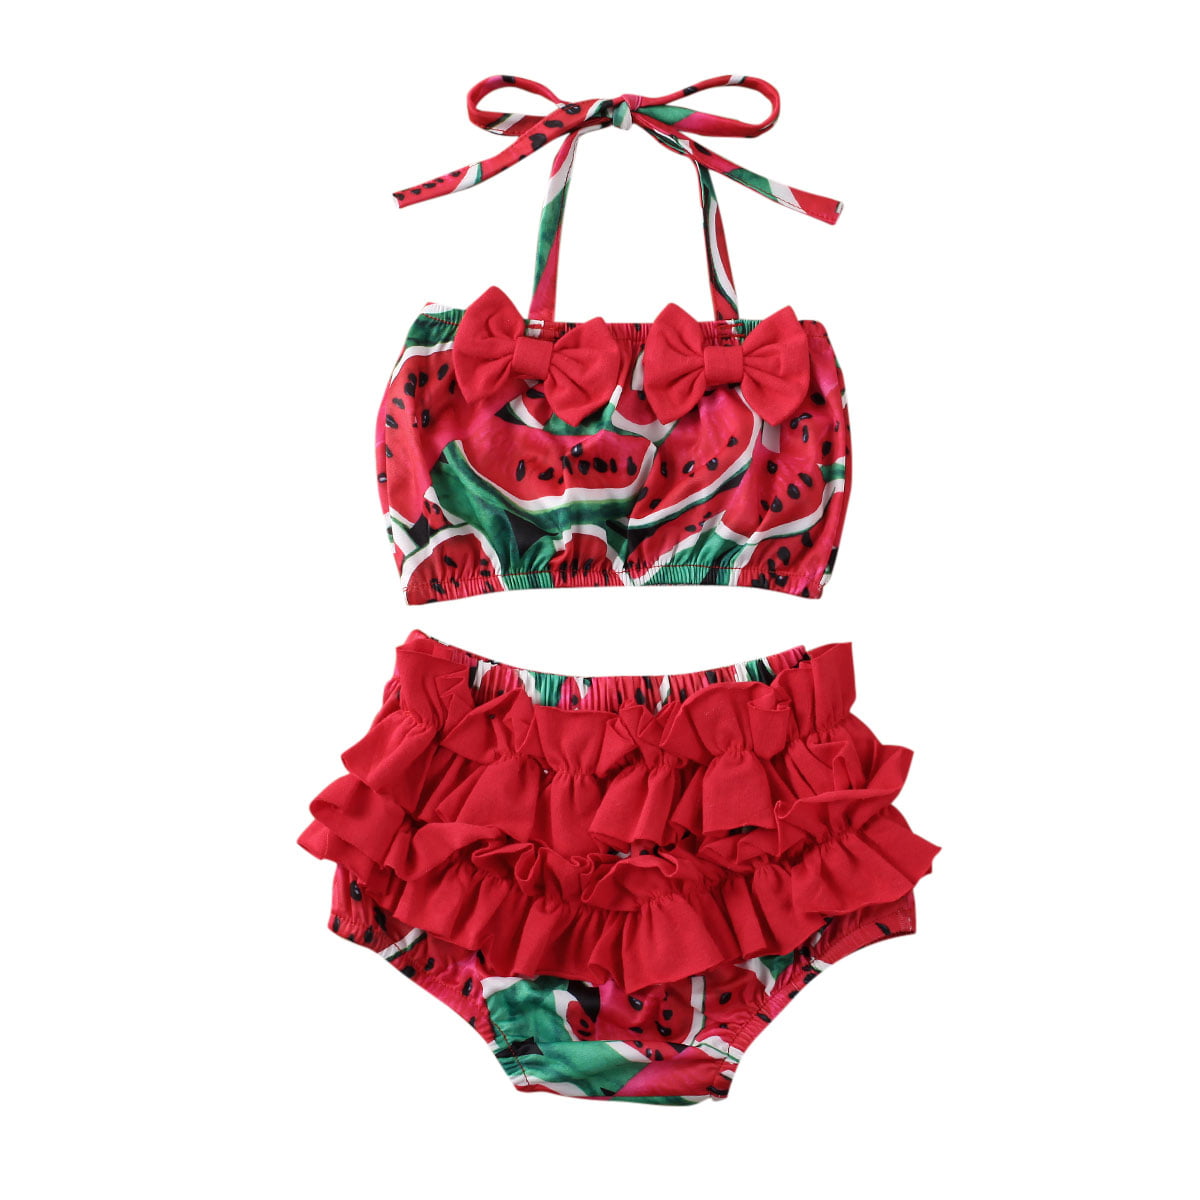 Newborn Baby Girl Swimwear Halter Neck Tassels Floral Watermelon Swimsuit Bathing Suit Bikini Set Summer Outfits 3Pcs 